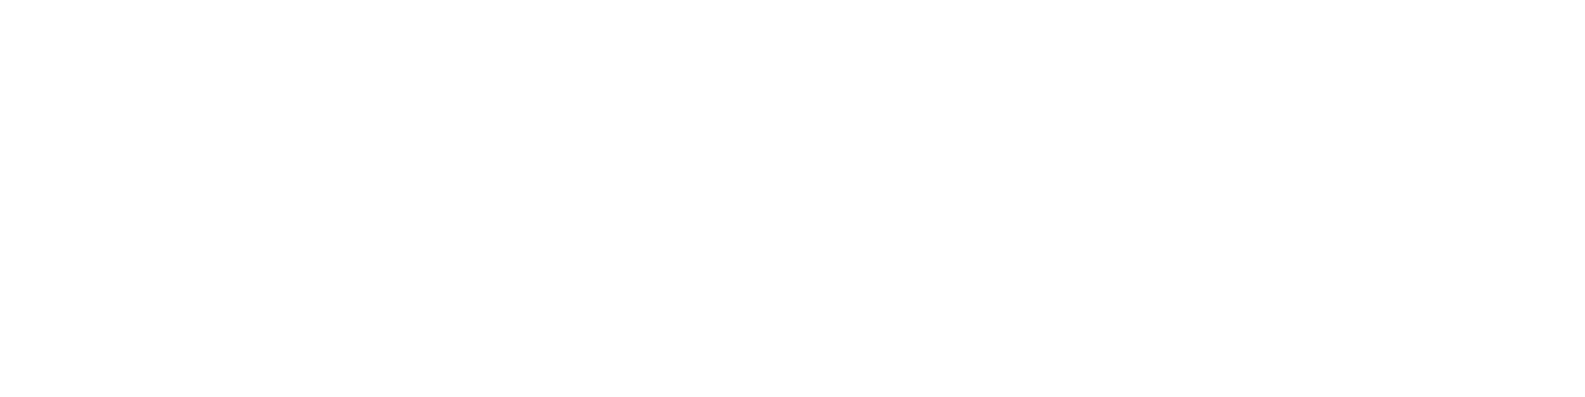 Cerevel Therapeutics Logo groß für dunkle Hintergründe (transparentes PNG)